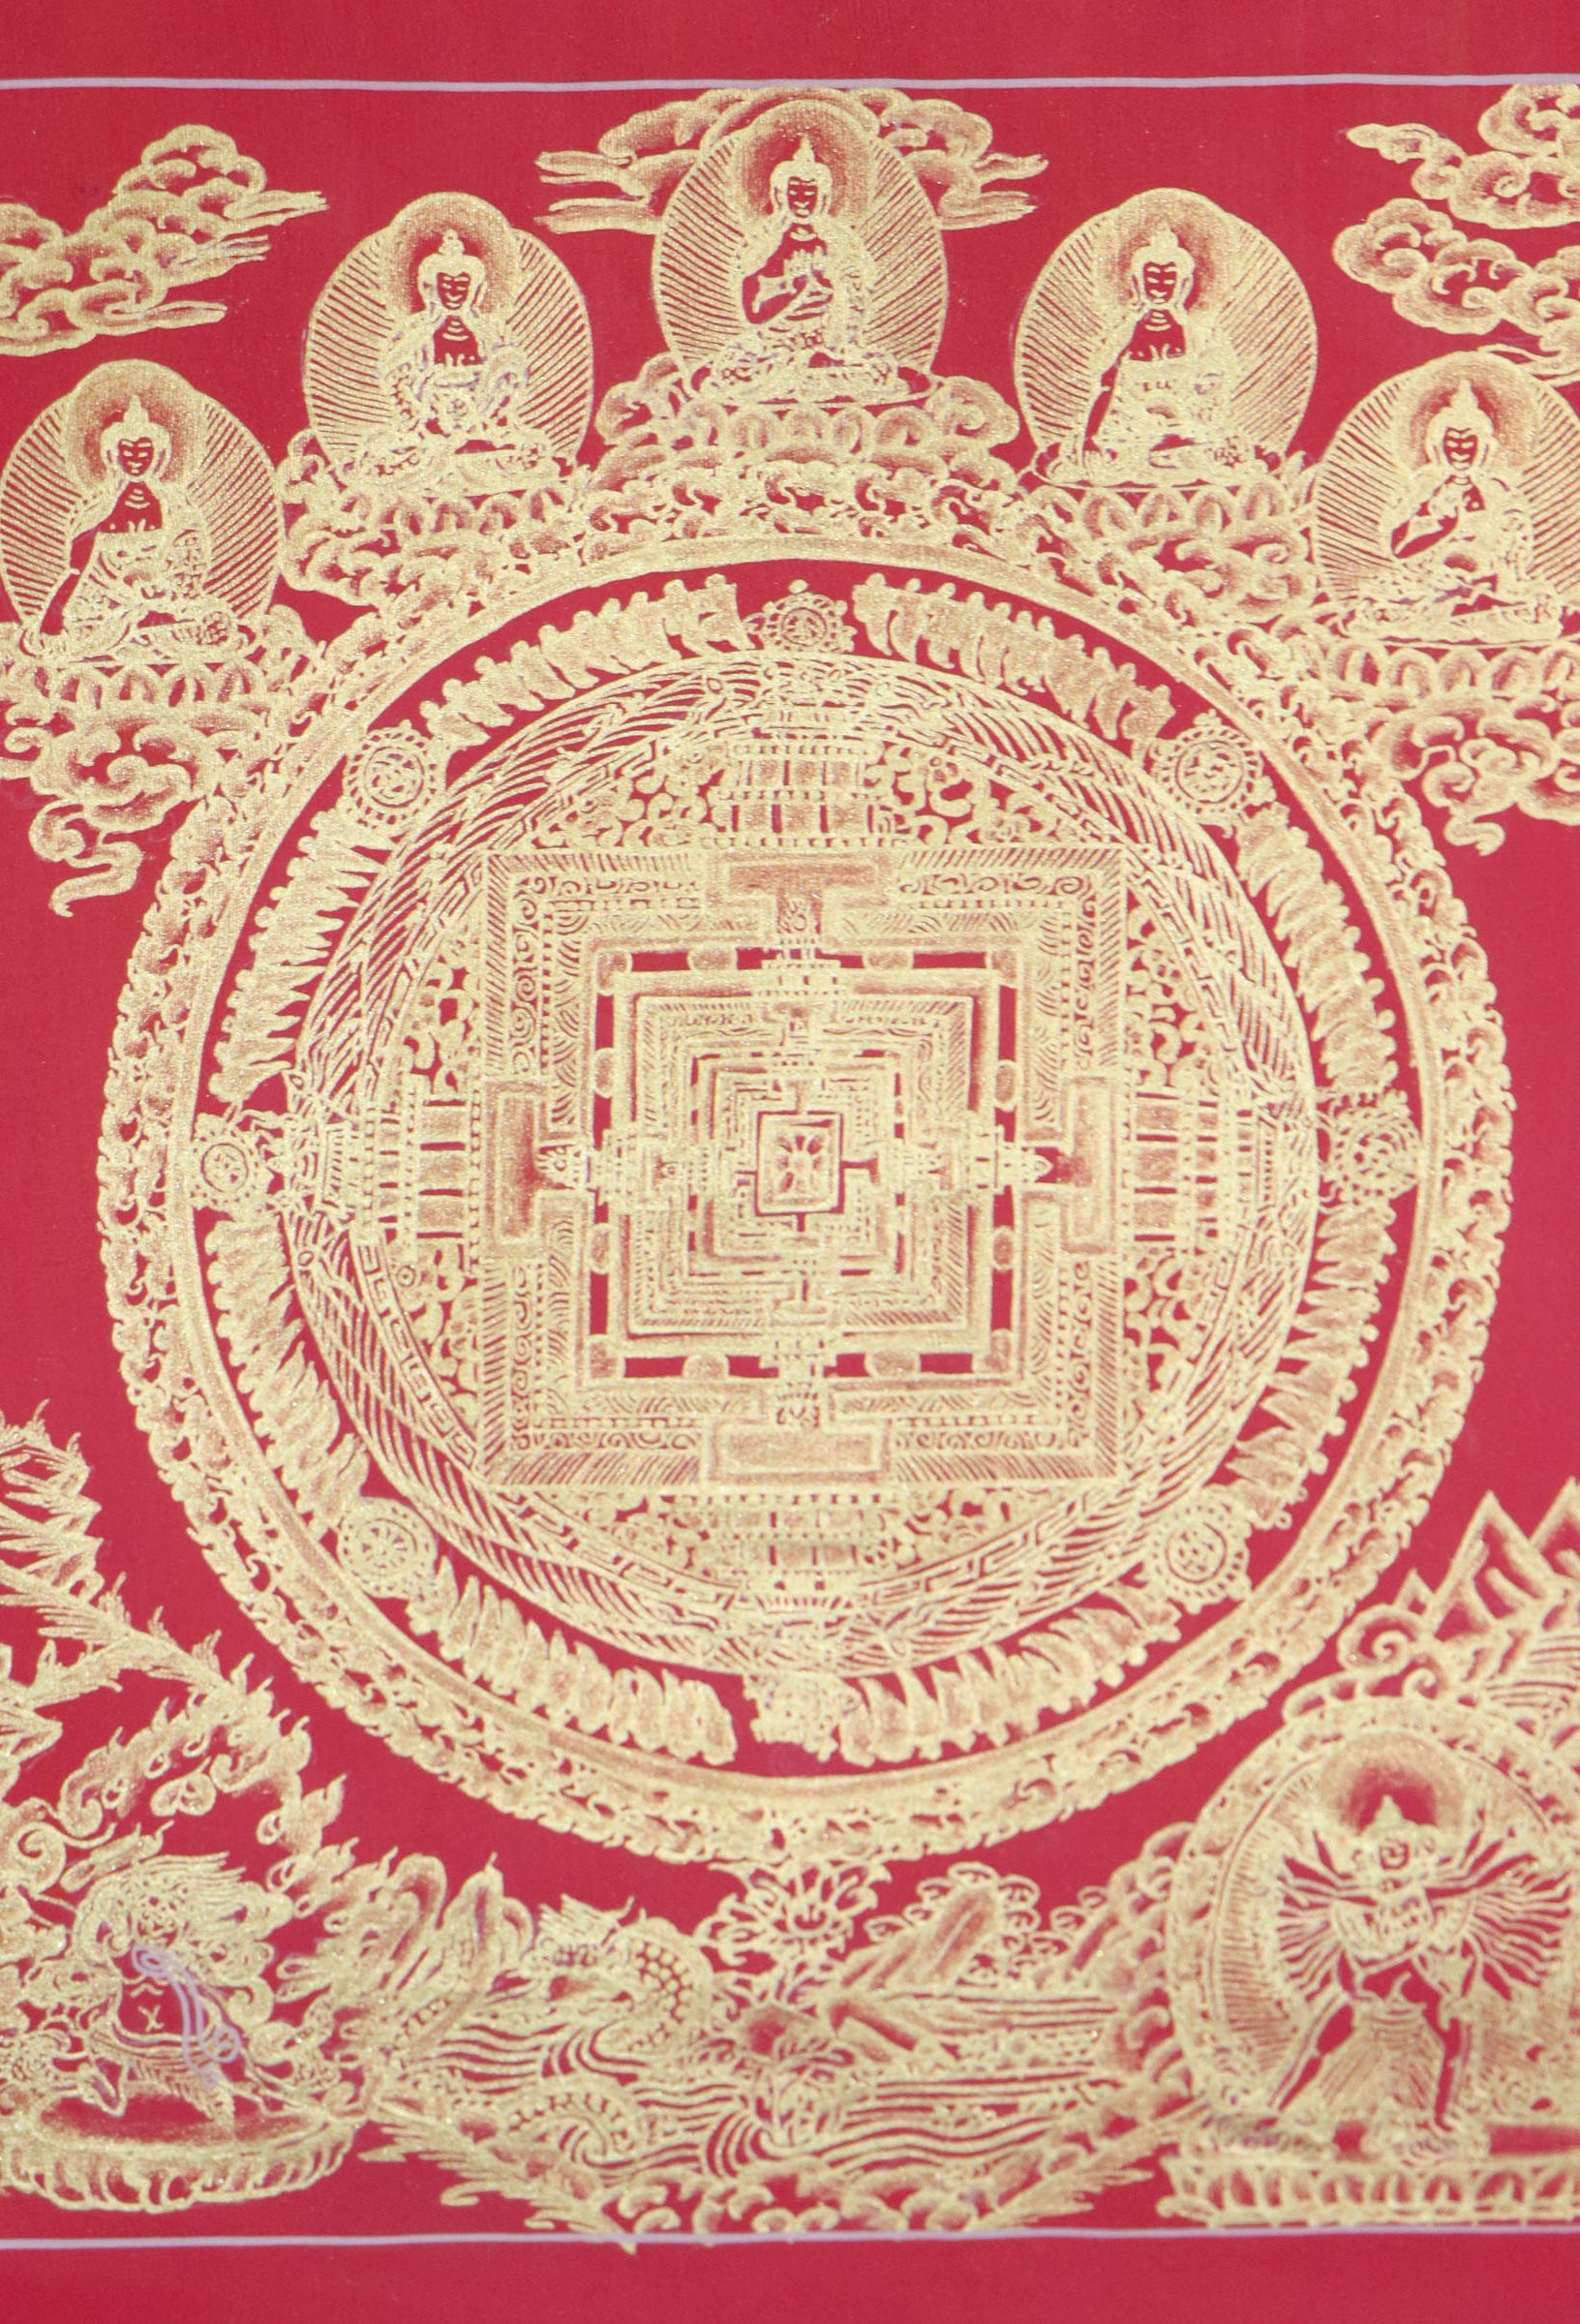 Red & Gold Kalchakra Mandala Thangka painting on cotton canvas for wall hanging 